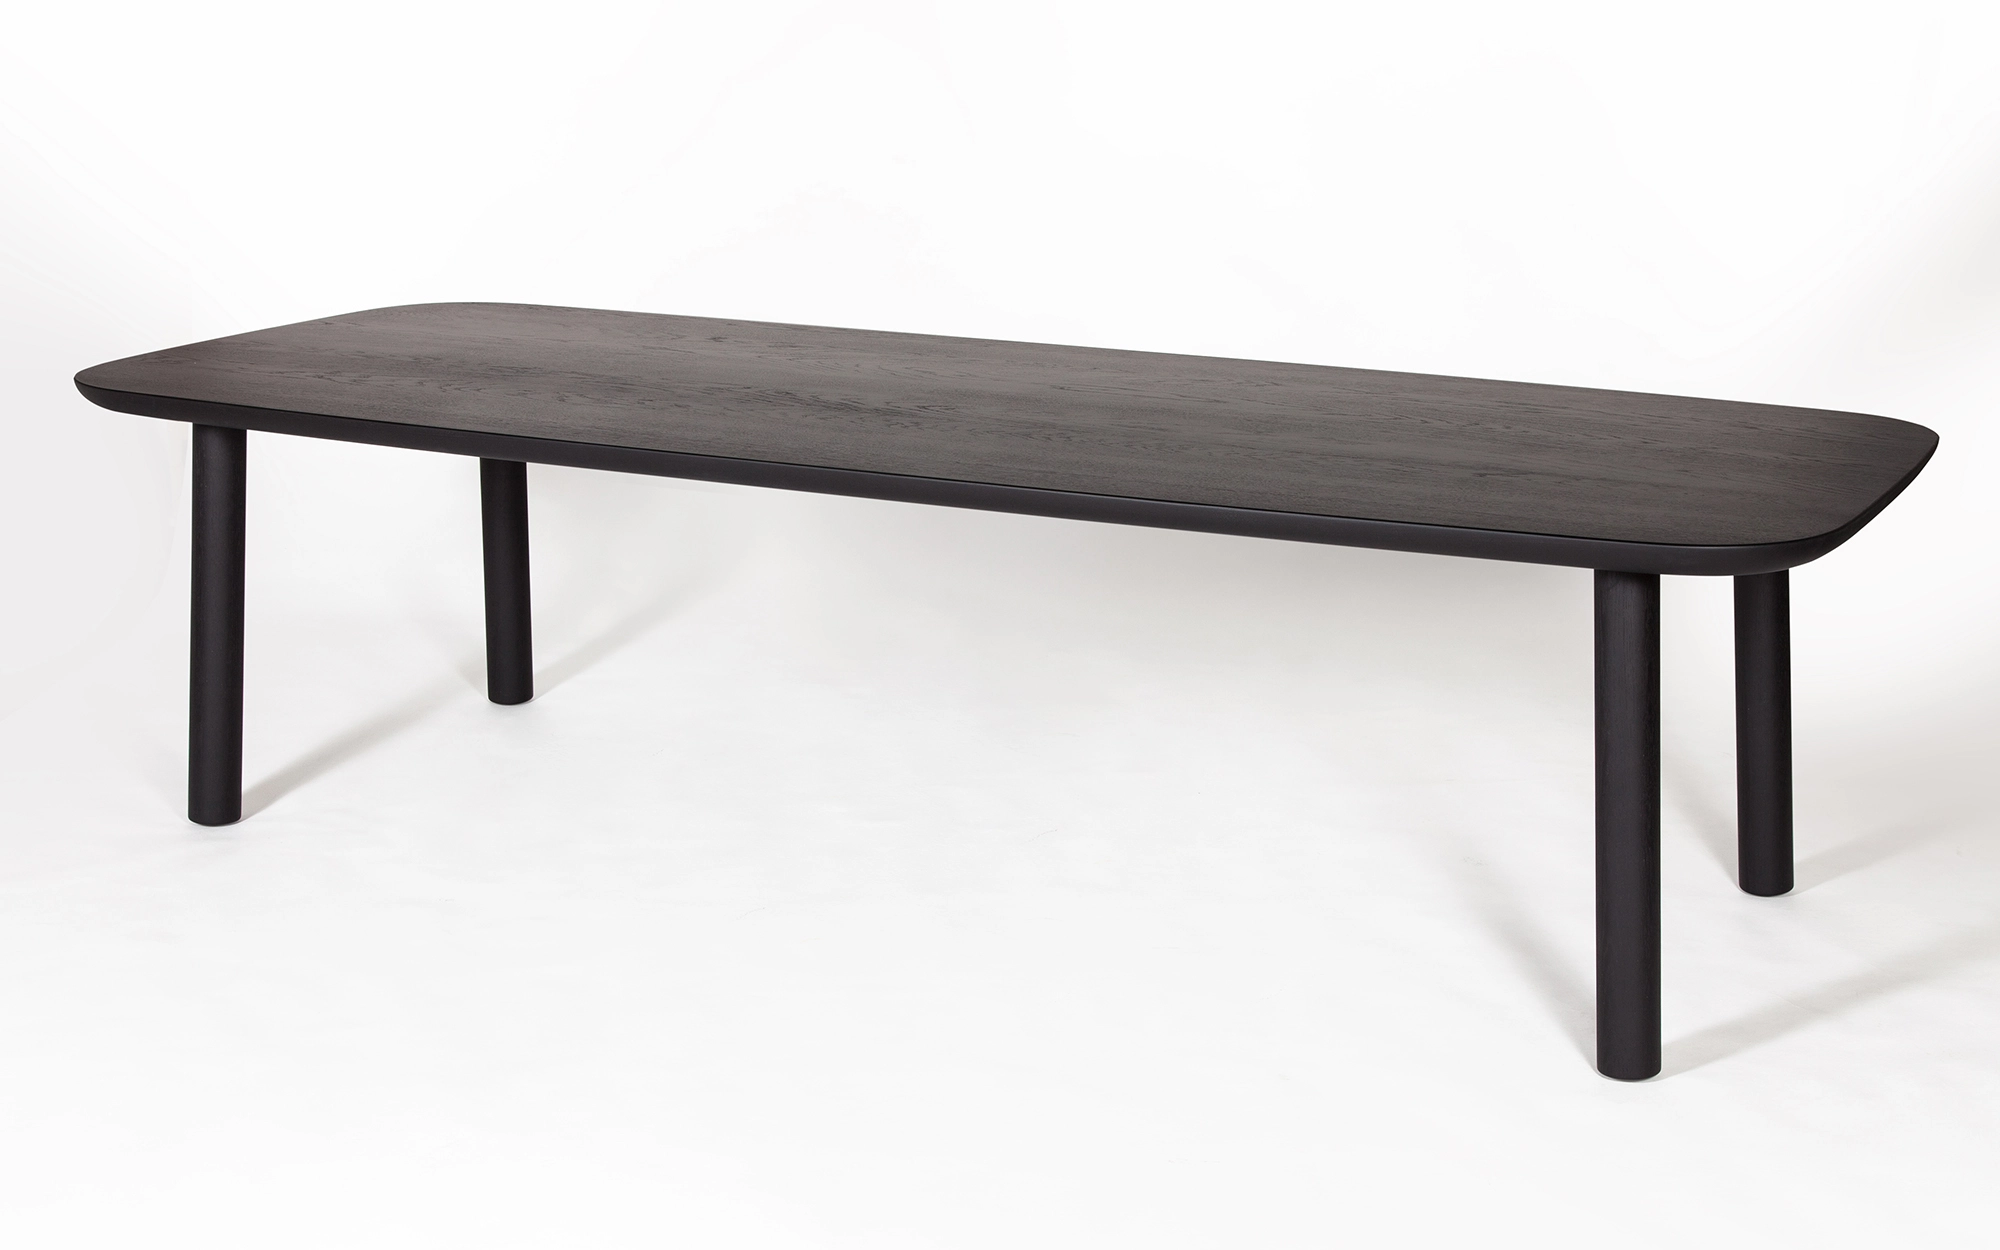 TOOW4L Table - Jasper Morrison - Object - Galerie kreo